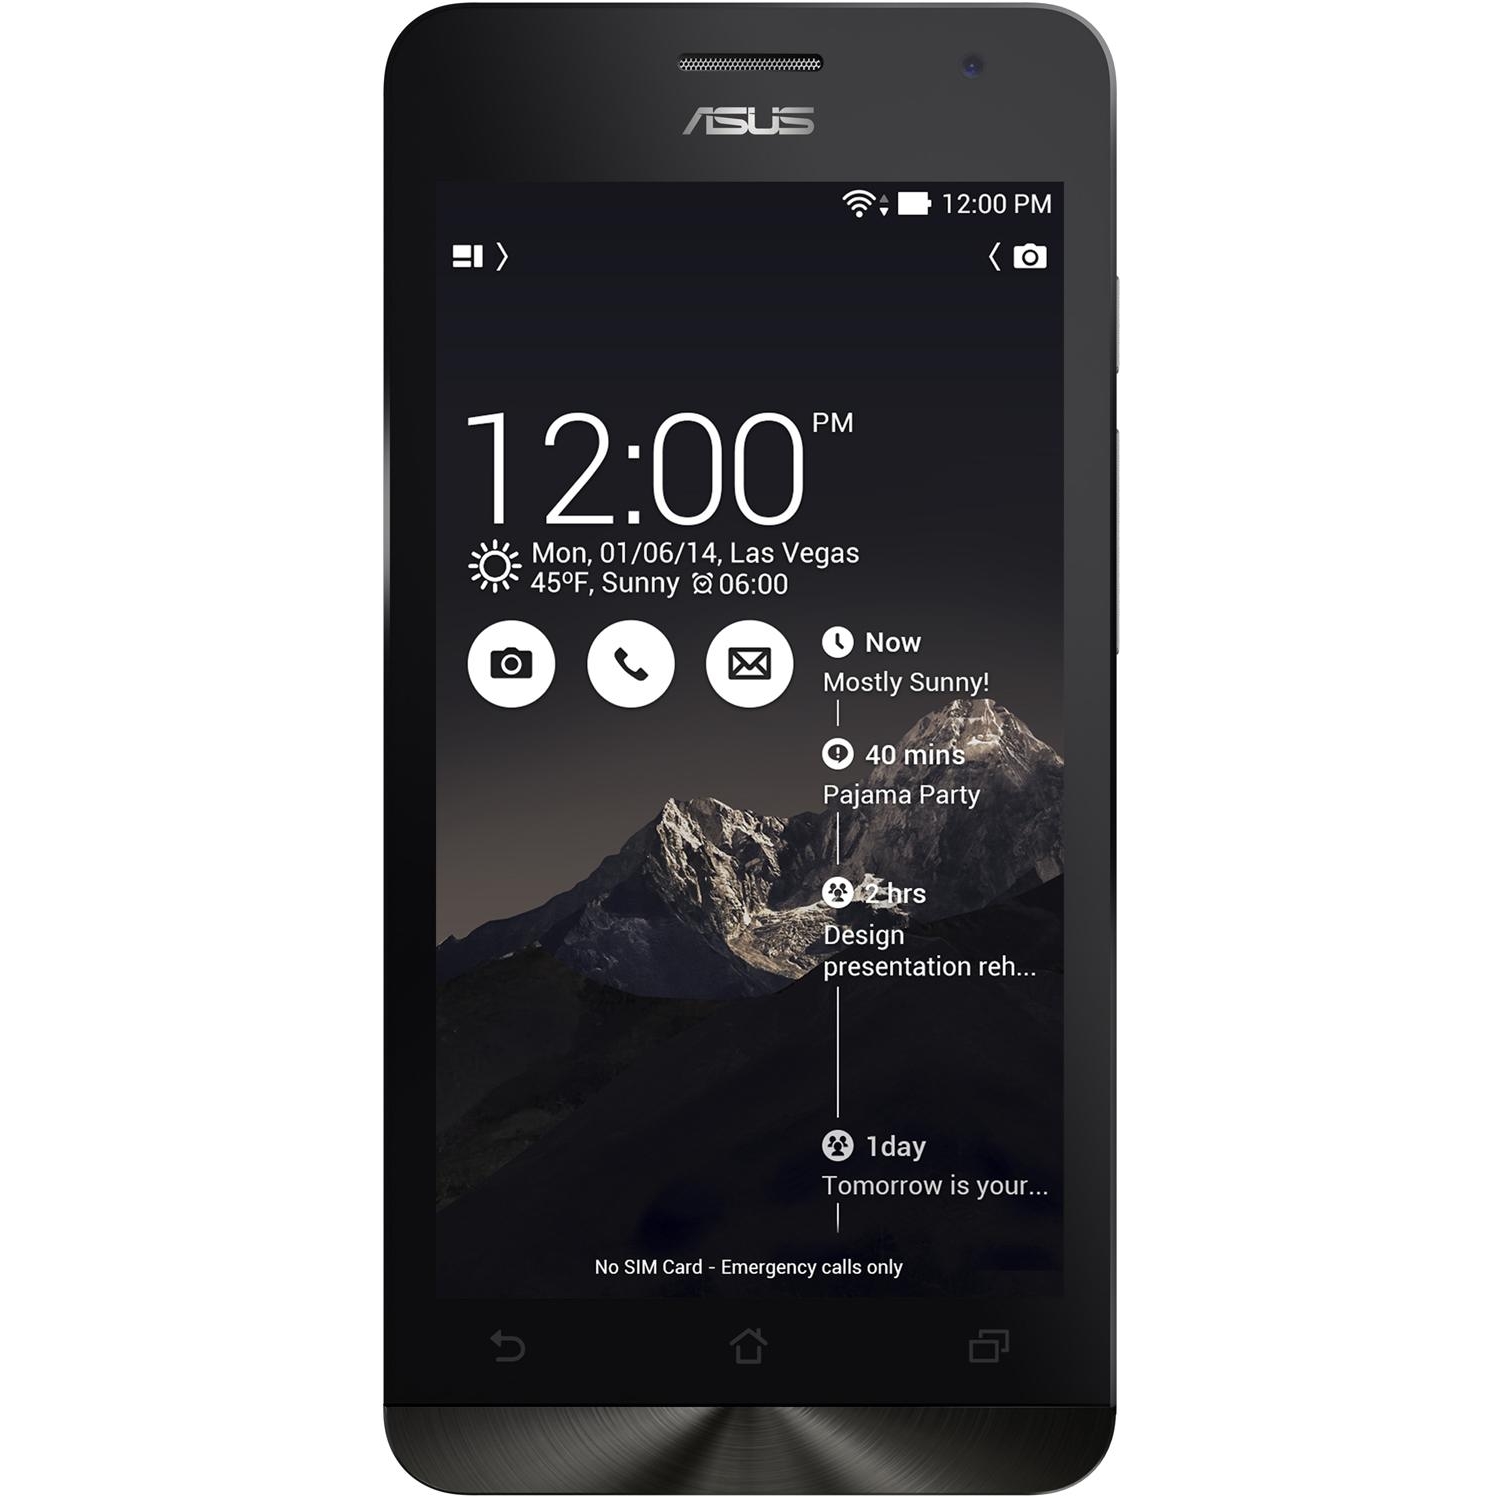 ASUS ZenFone 5 A501CG (Charcoal Black) 16GB - зображення 1